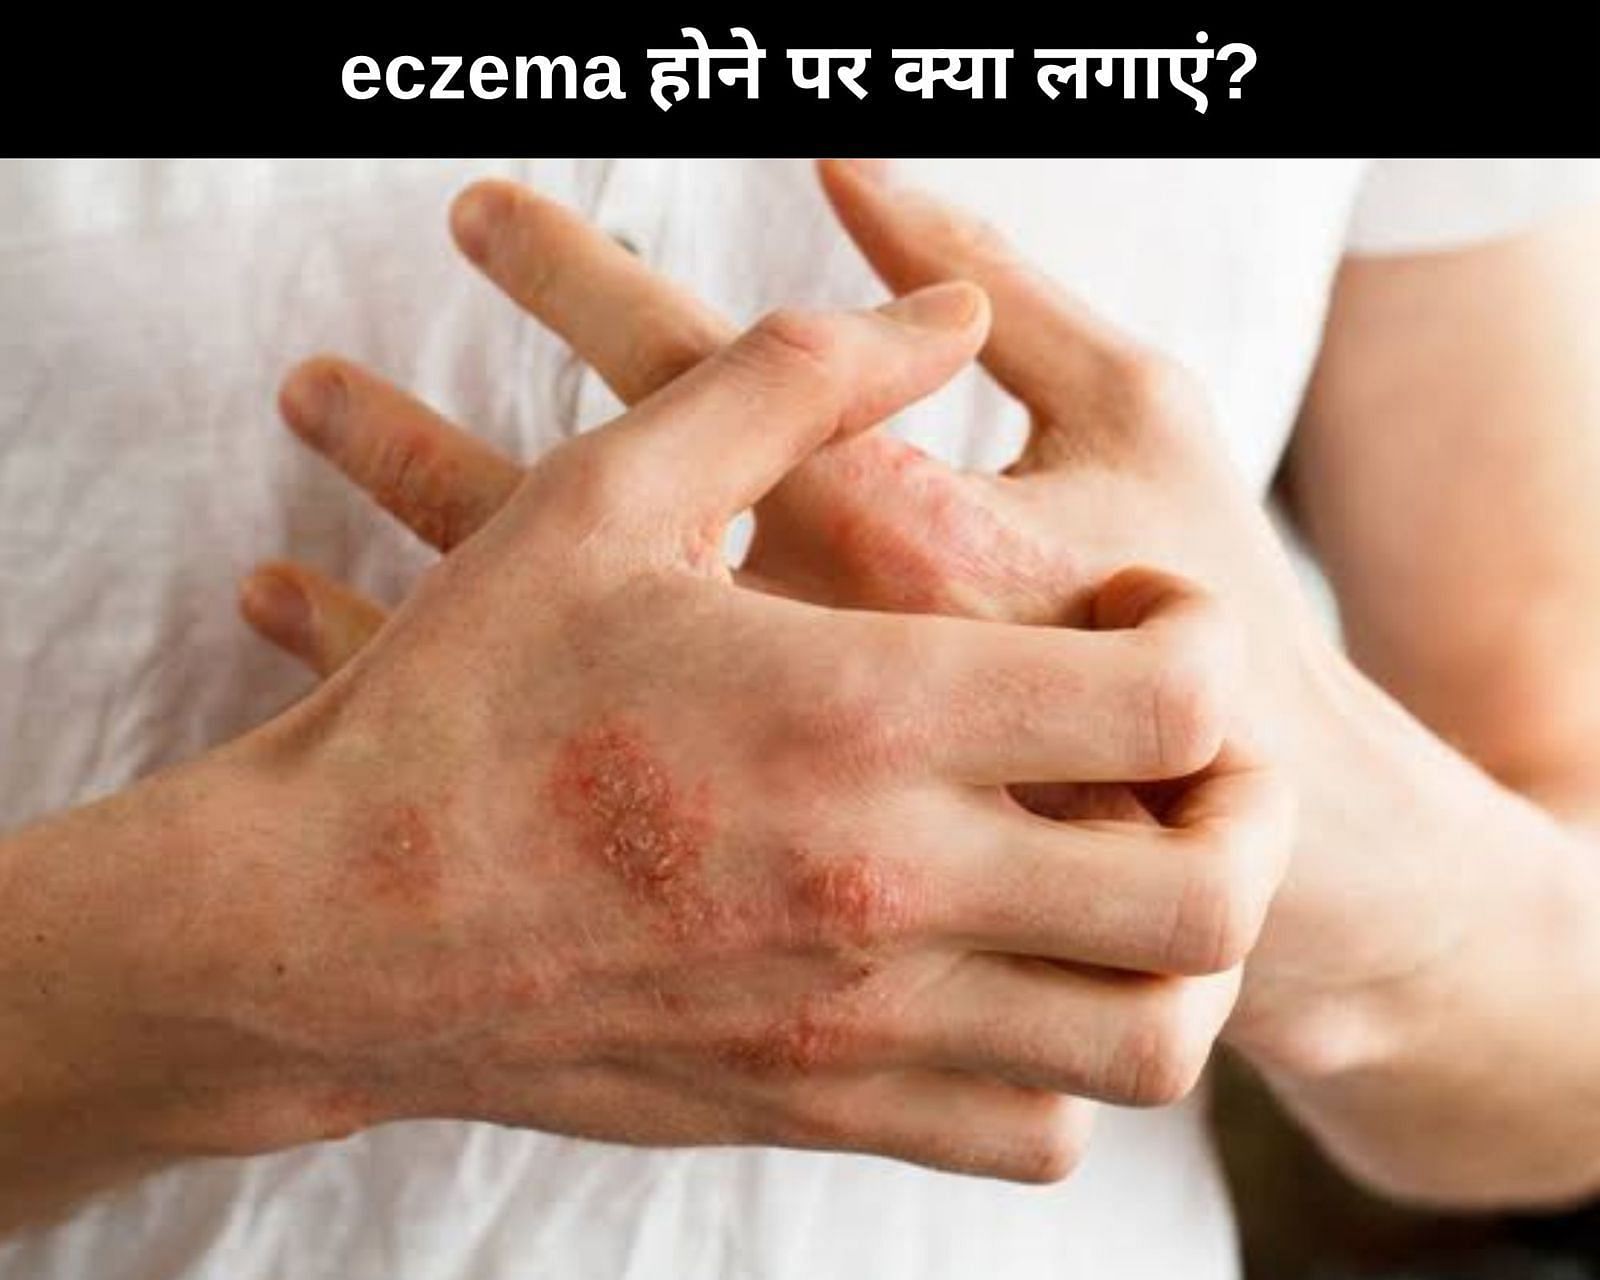 eczema होने पर क्या लगाएं? (फोटो - sportskeedaहिन्दी)